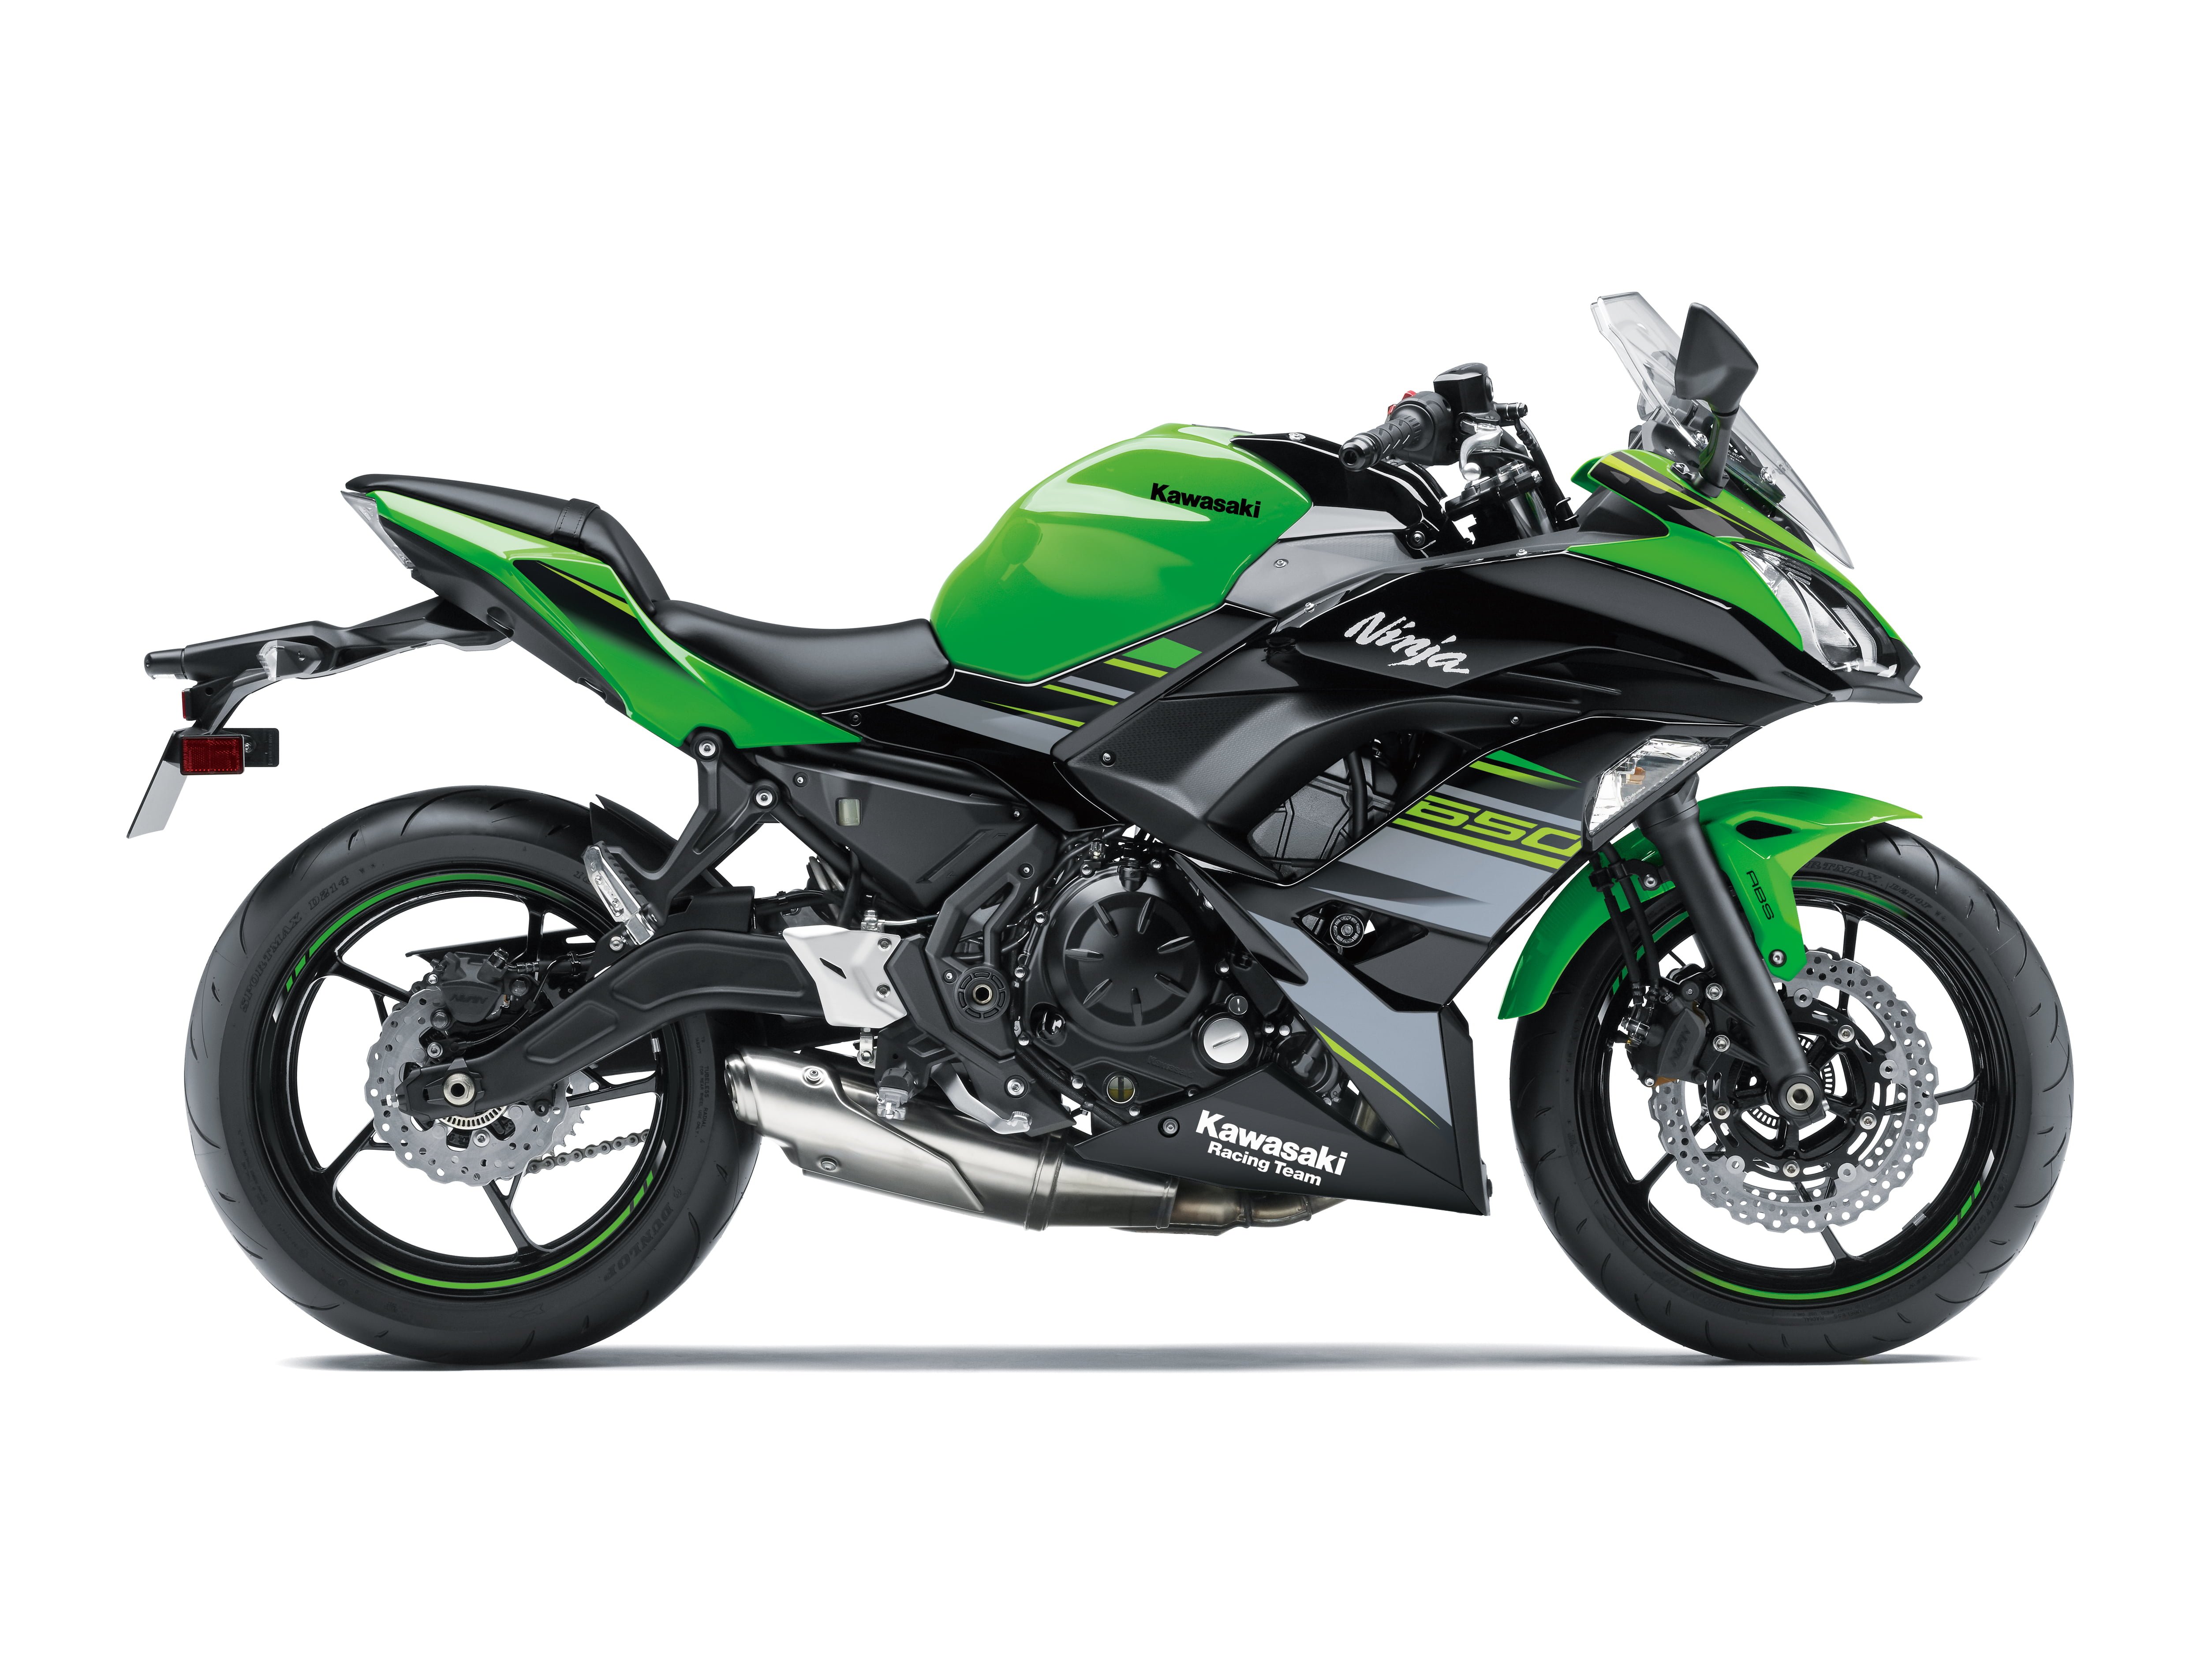 2018 Kawasaki Ninja 650 KRT Edition India Price, Specifications, Features